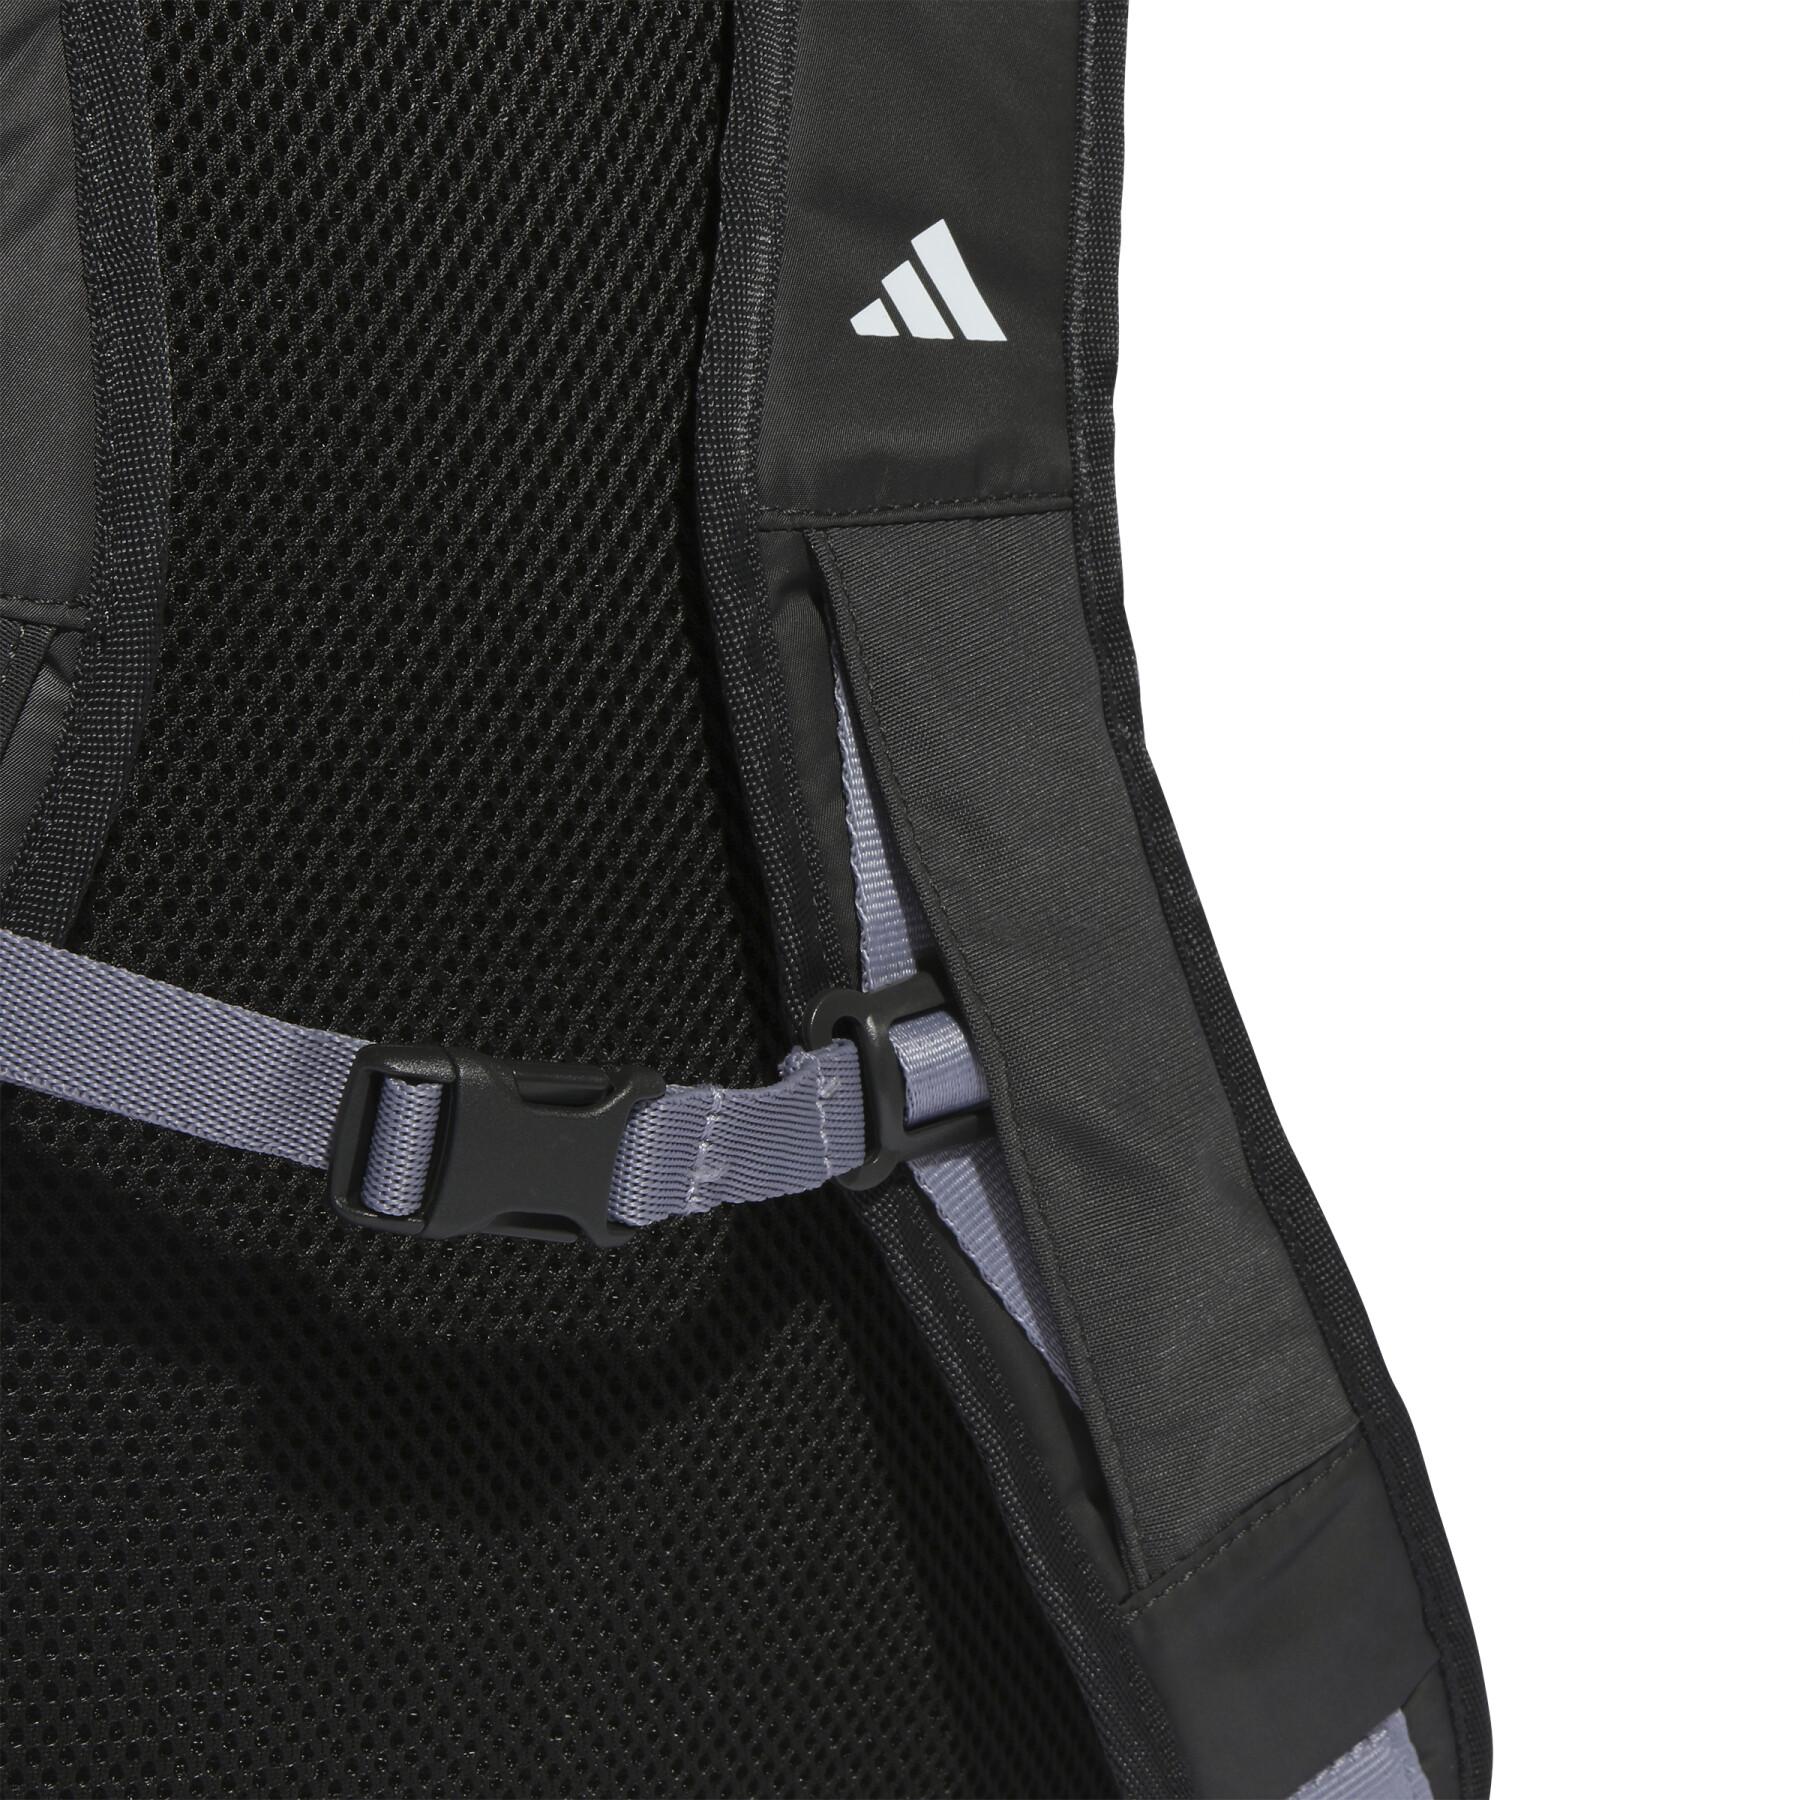 Backpack adidas Gym